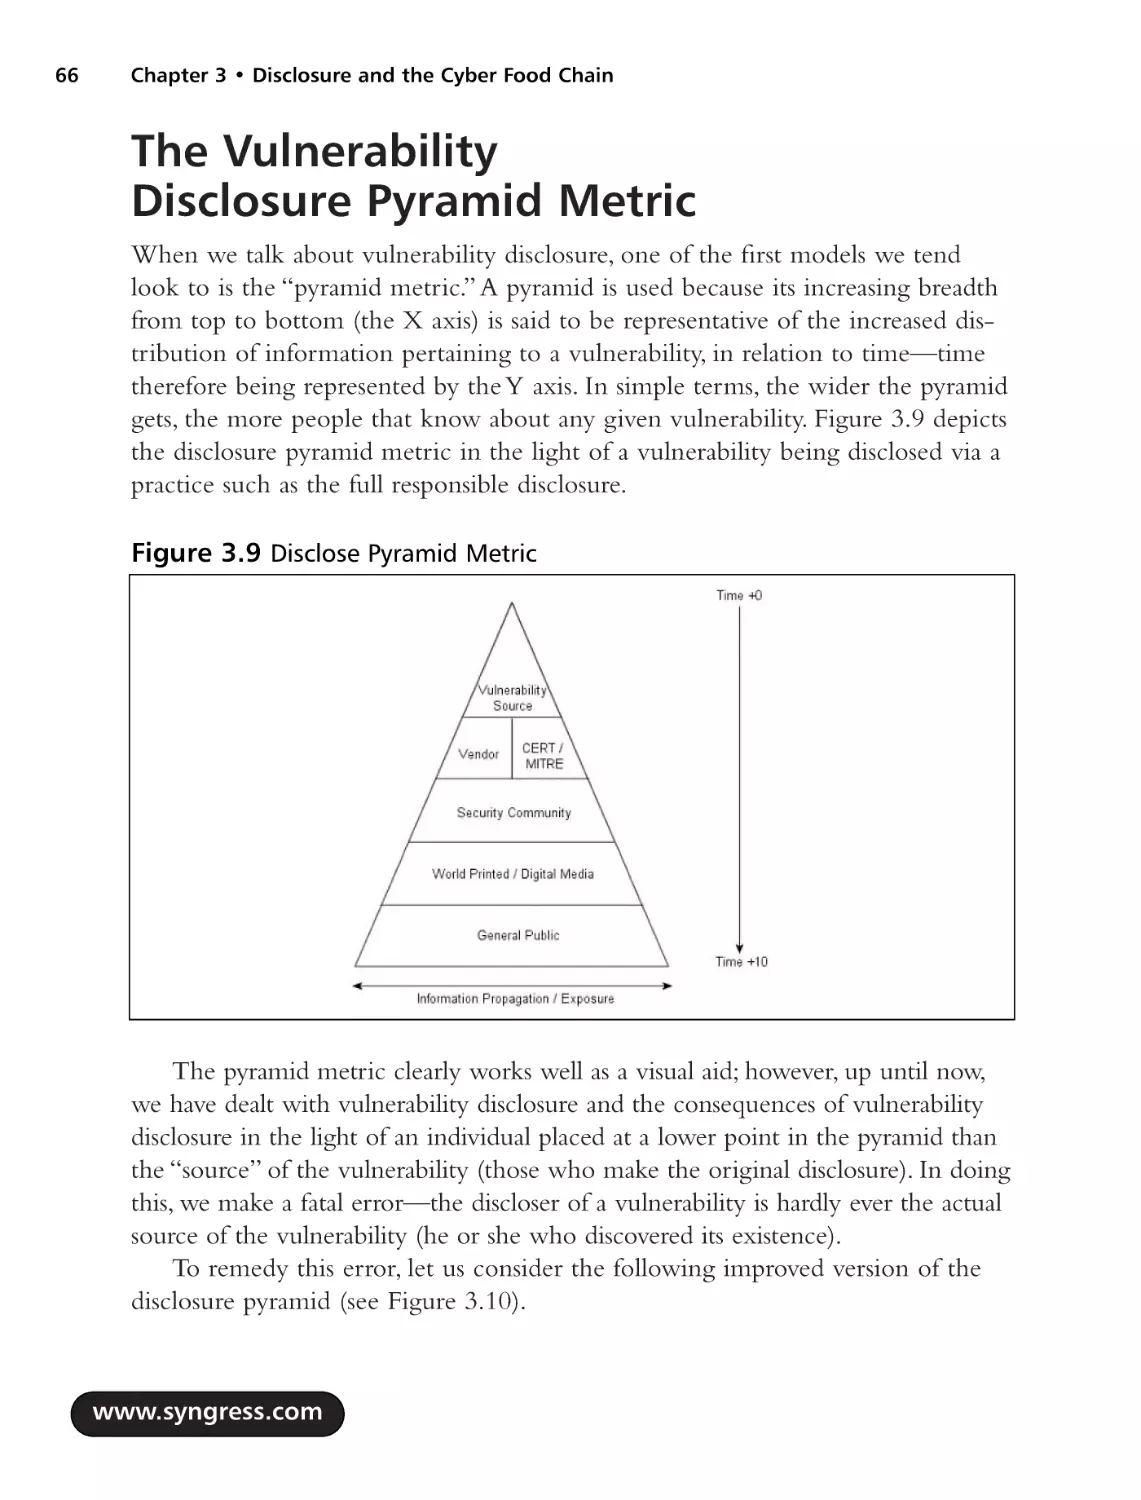 The Vulnerability Disclosure Pyramid Metric